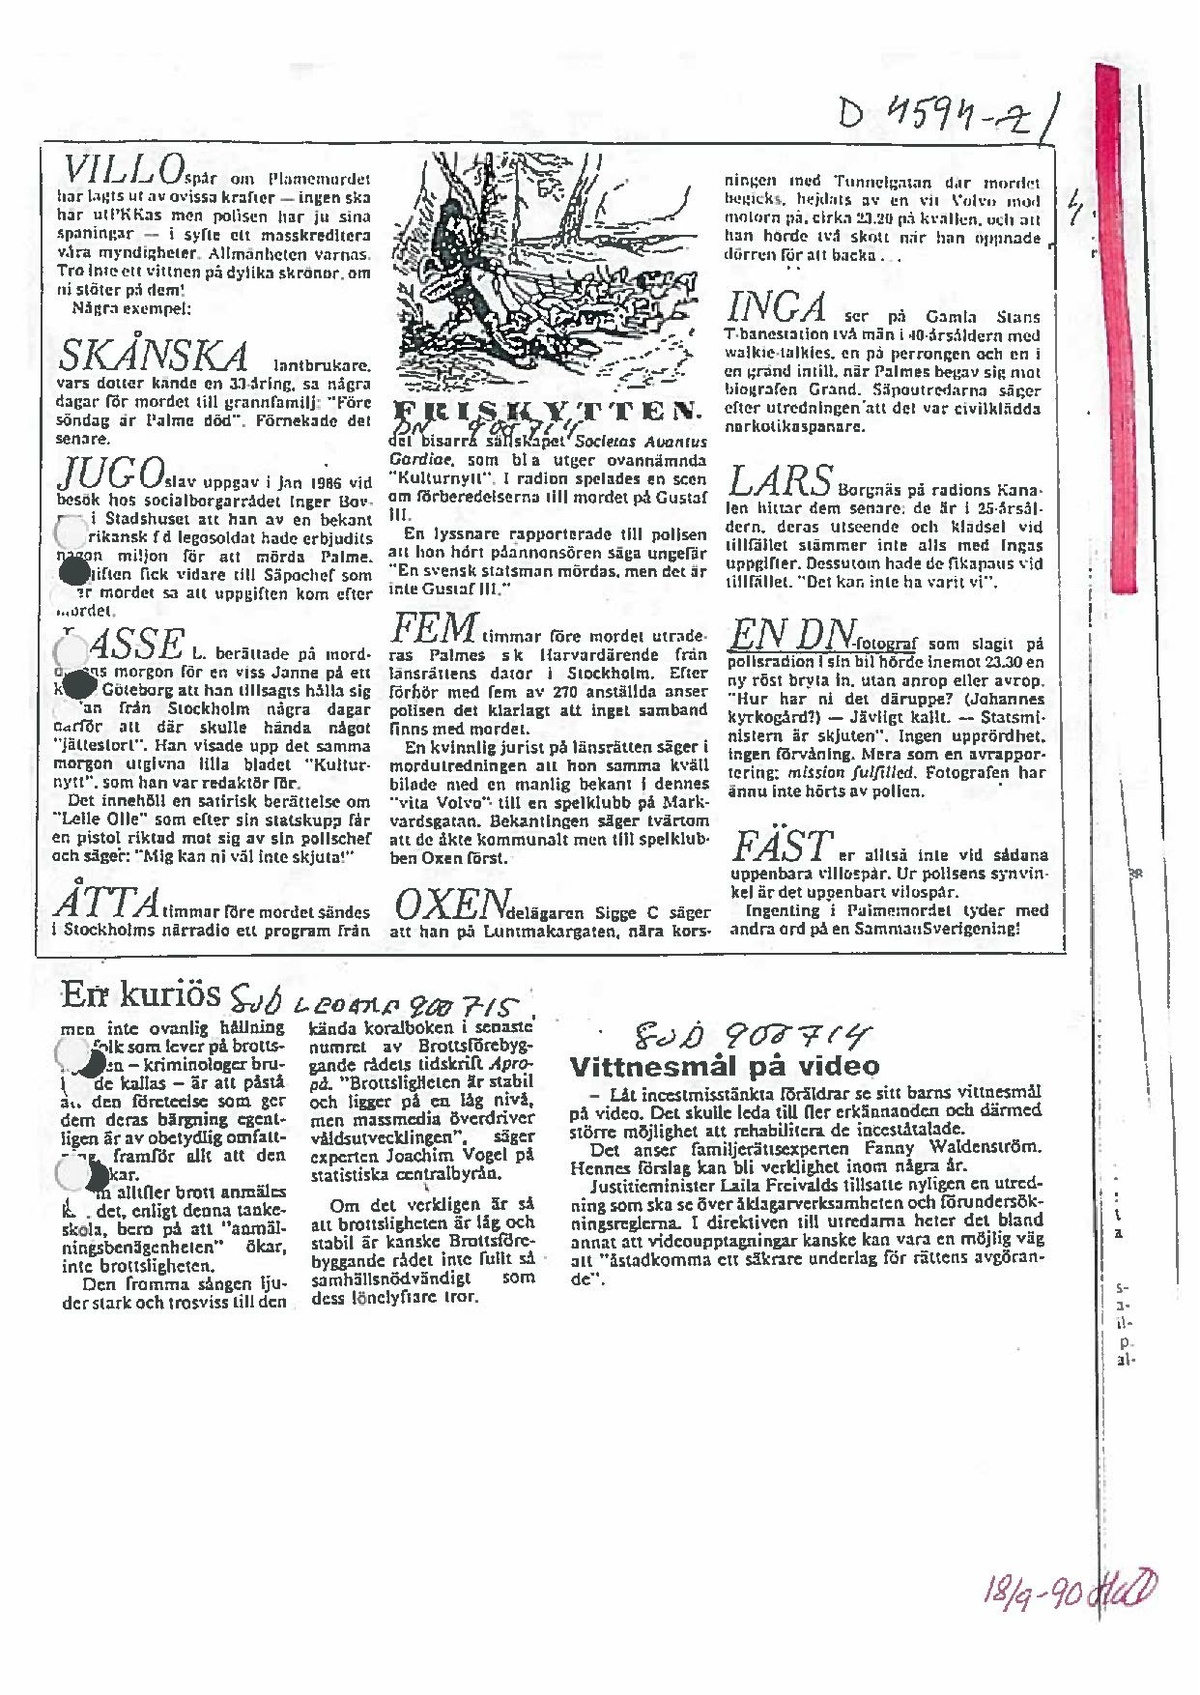 Pol-1986-03-25 D4594-01 Åke-Malmström-hörd-radiokommunikation.pdf